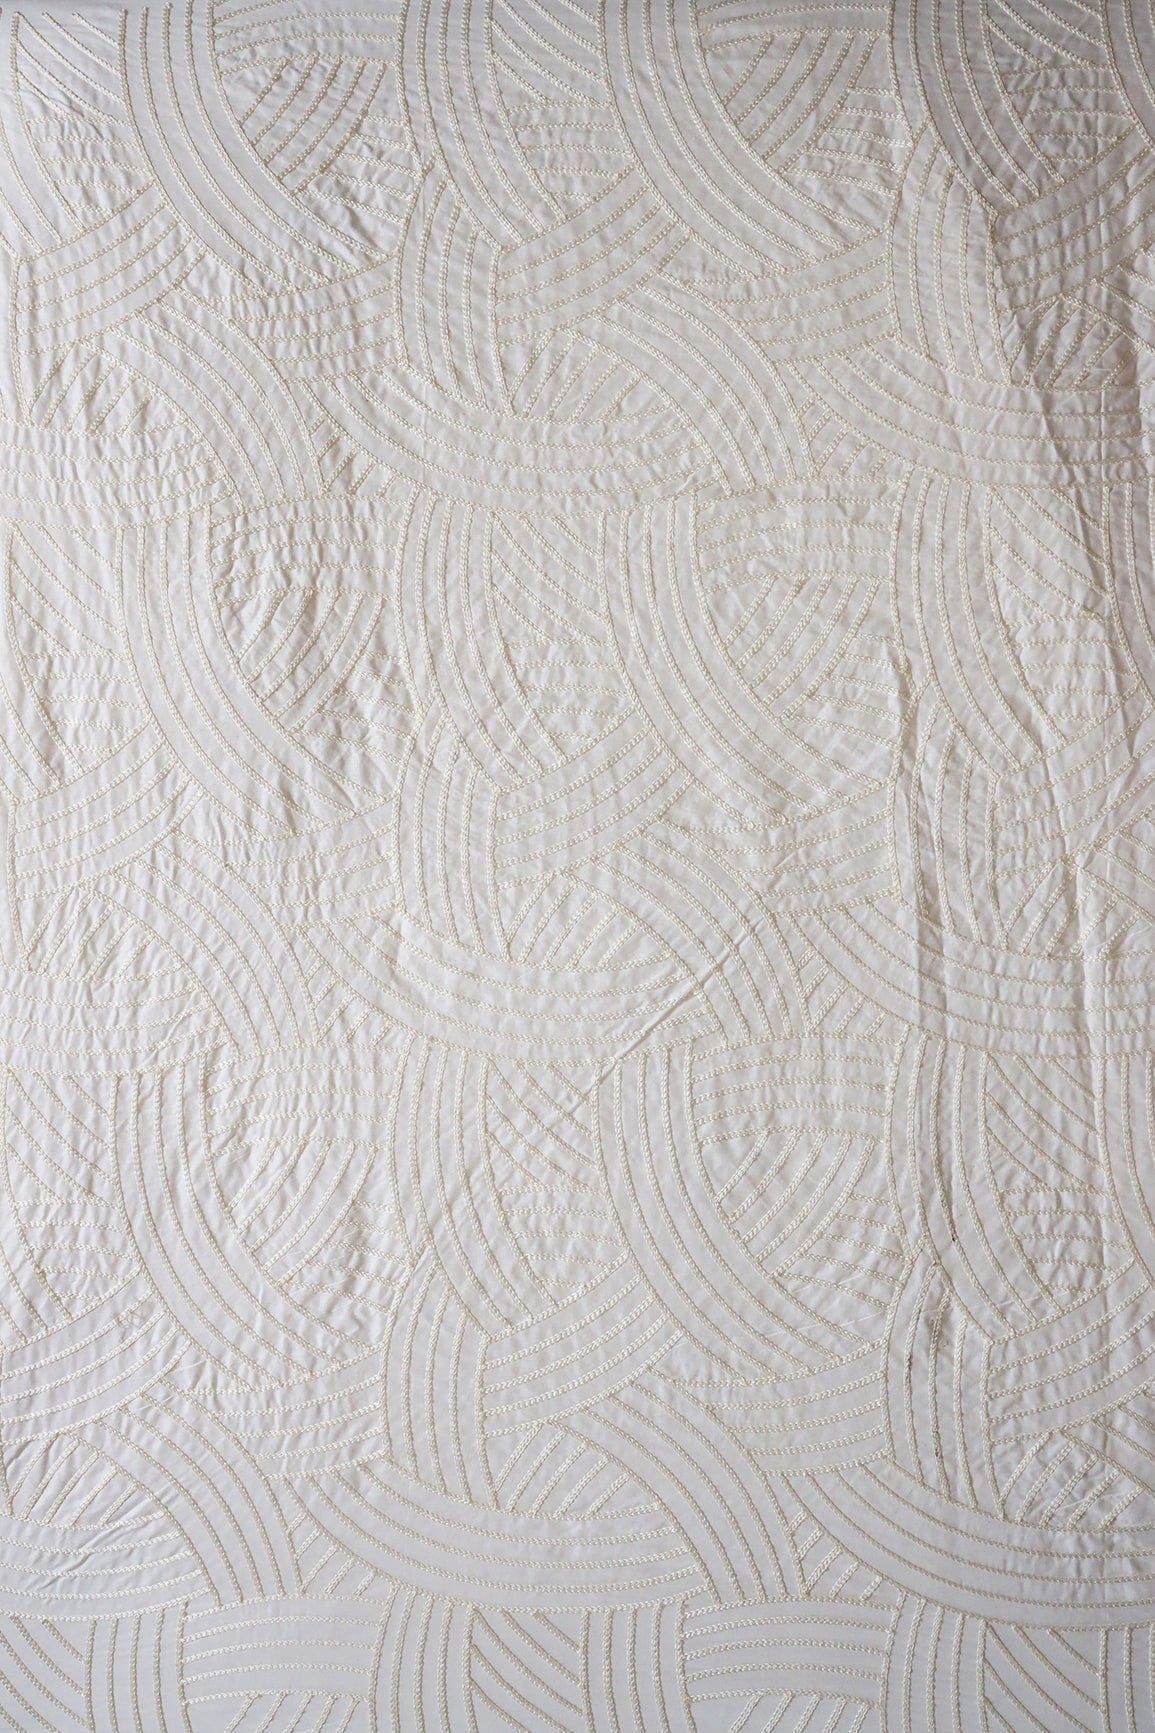 doeraa Embroidery Fabrics Cream Thread Geometric Pattern Heavy Embroidery Work On White Cotton Fabric